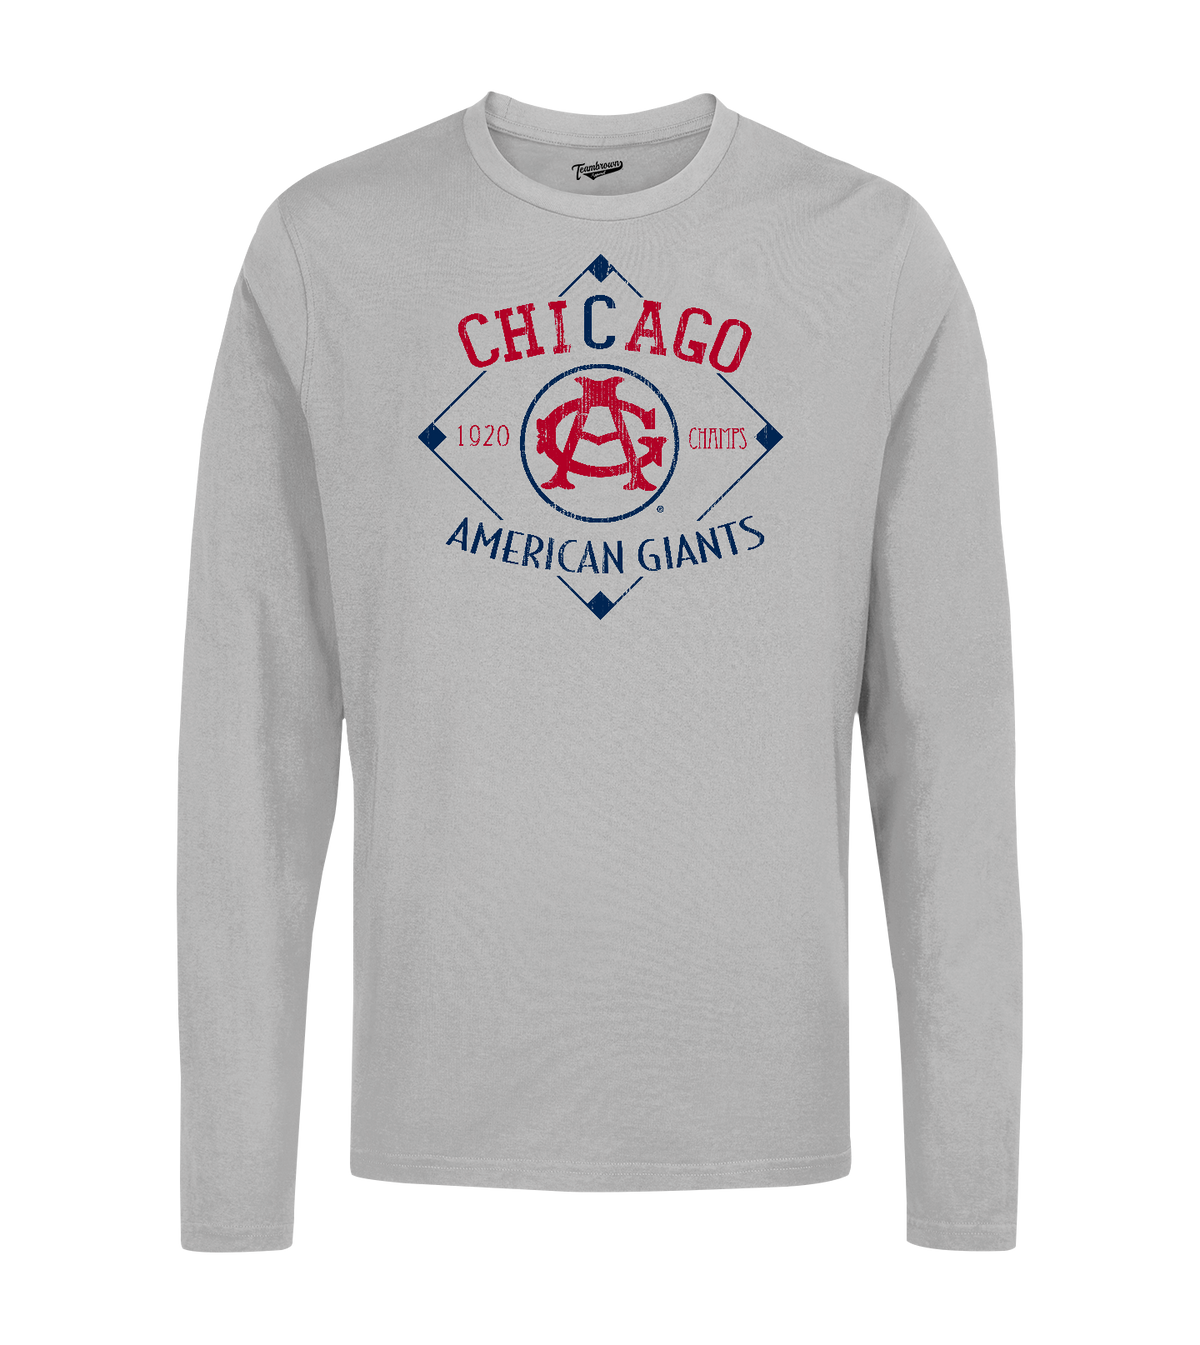 Chicago American Giants Apparel & Clothing, NLBM